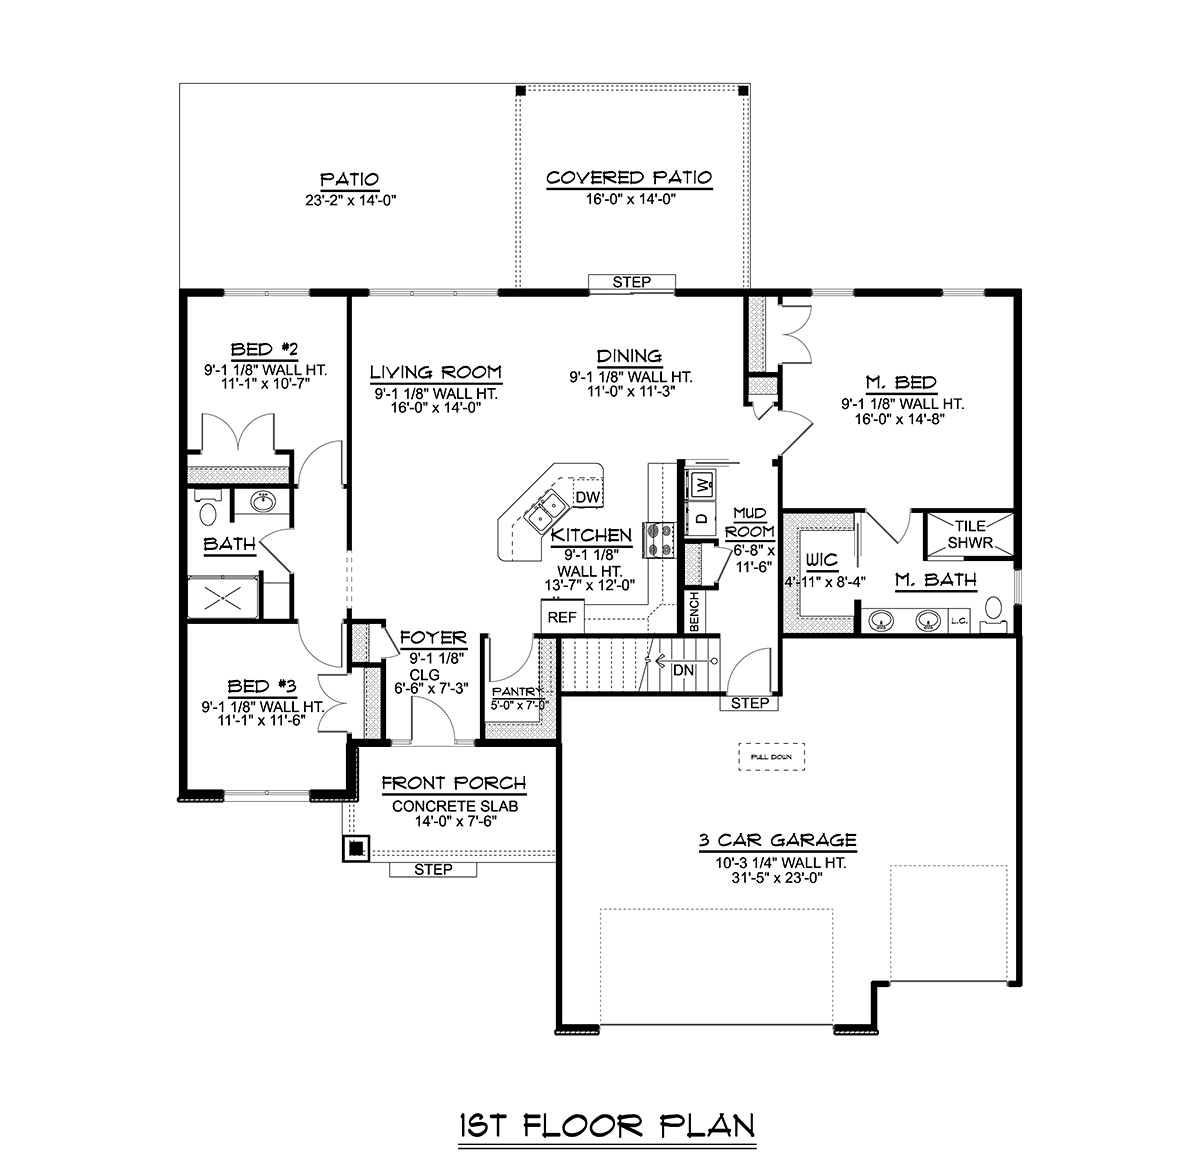 House Plan 41831 Alternate Level One